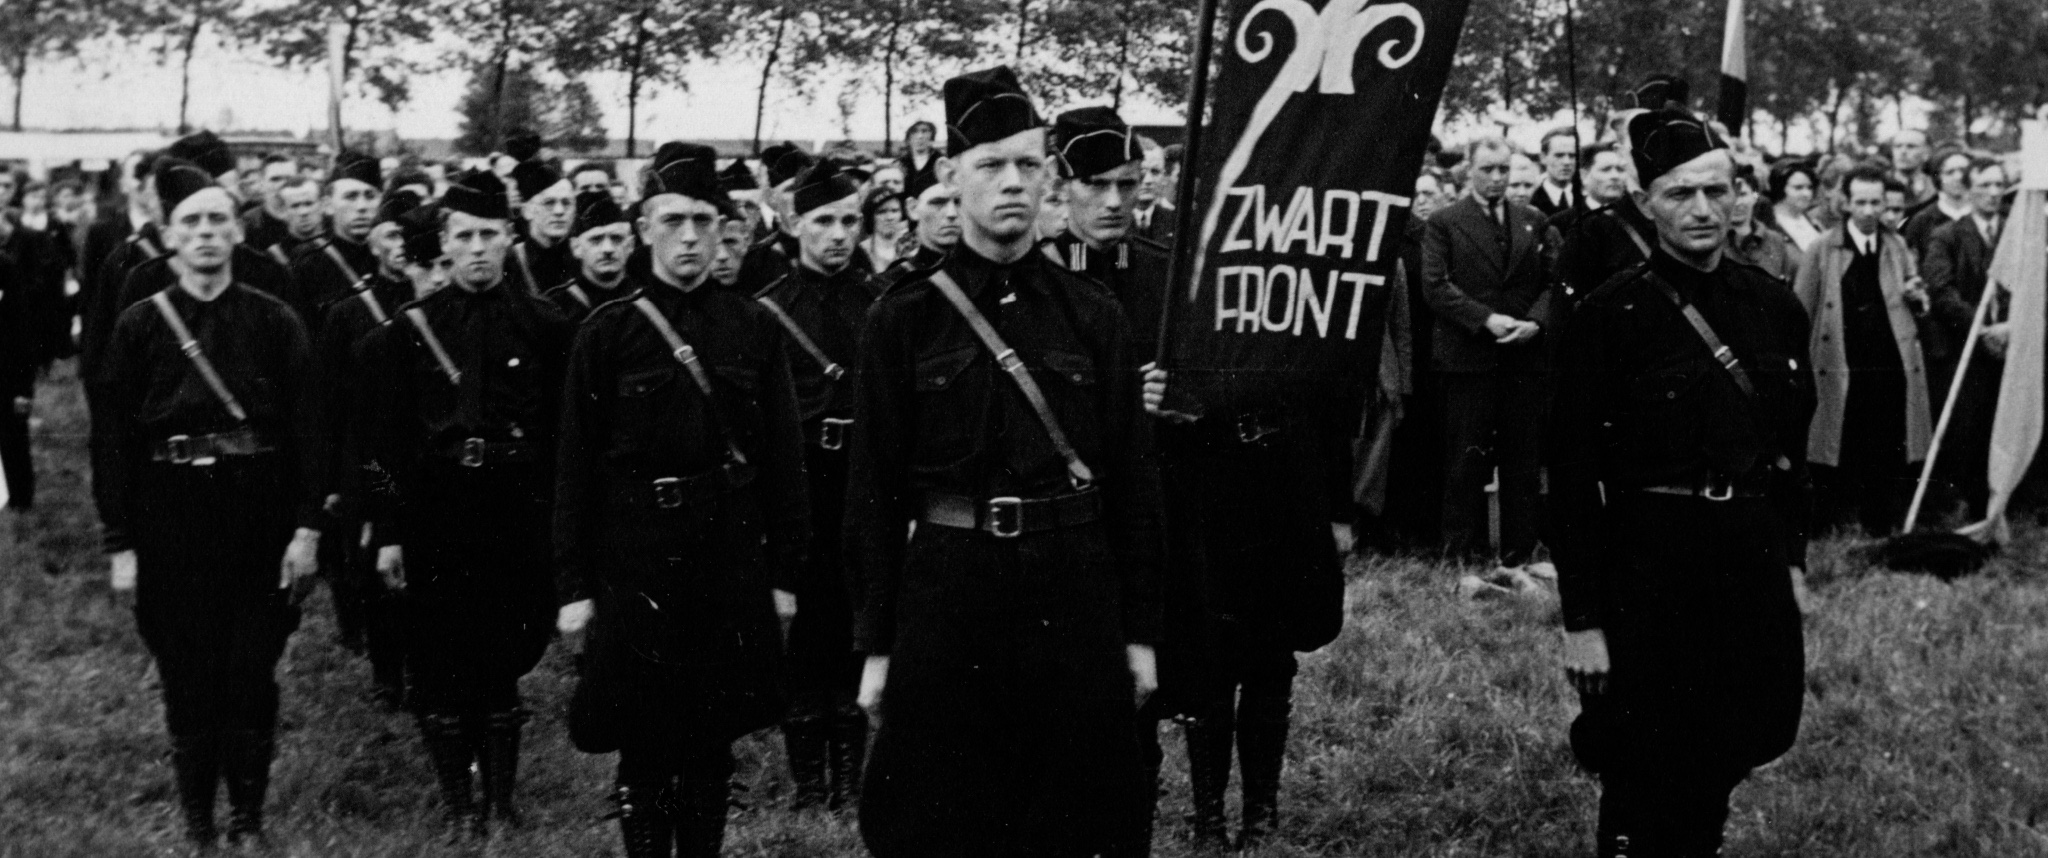 Fascism, Arnold Meijer, Zwart Front, Black front, Black Stormers, black shirts, Brabant, Oisterwijk, day of the country, weerkorps, militia, violence, politics, history